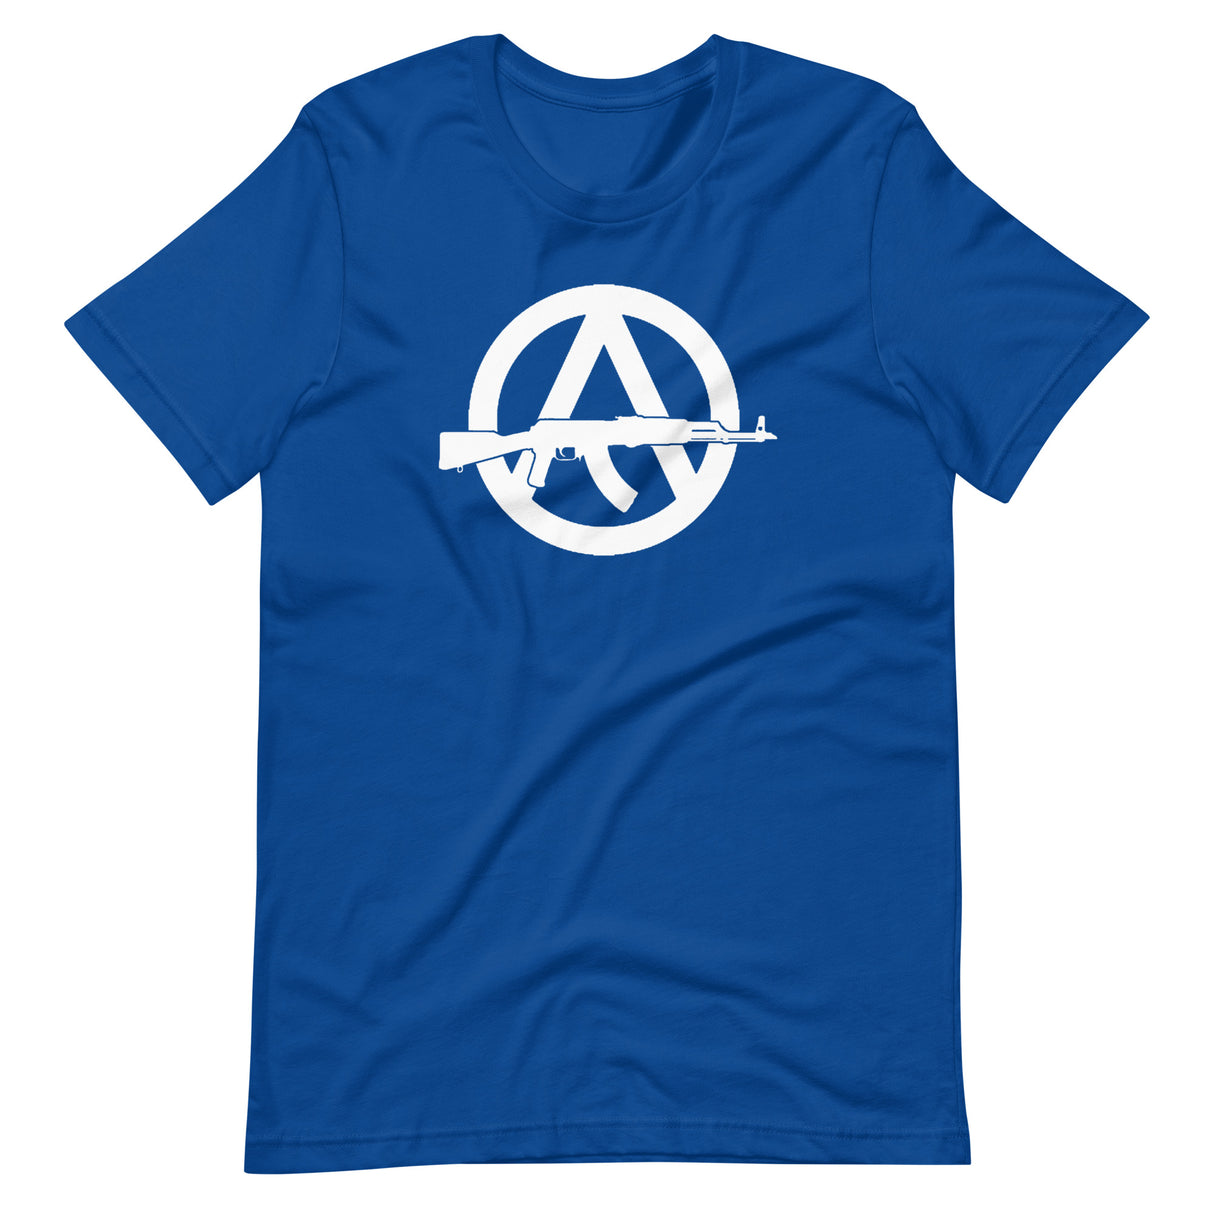 Anarchy AK 47 Shirt - Libertarian Country